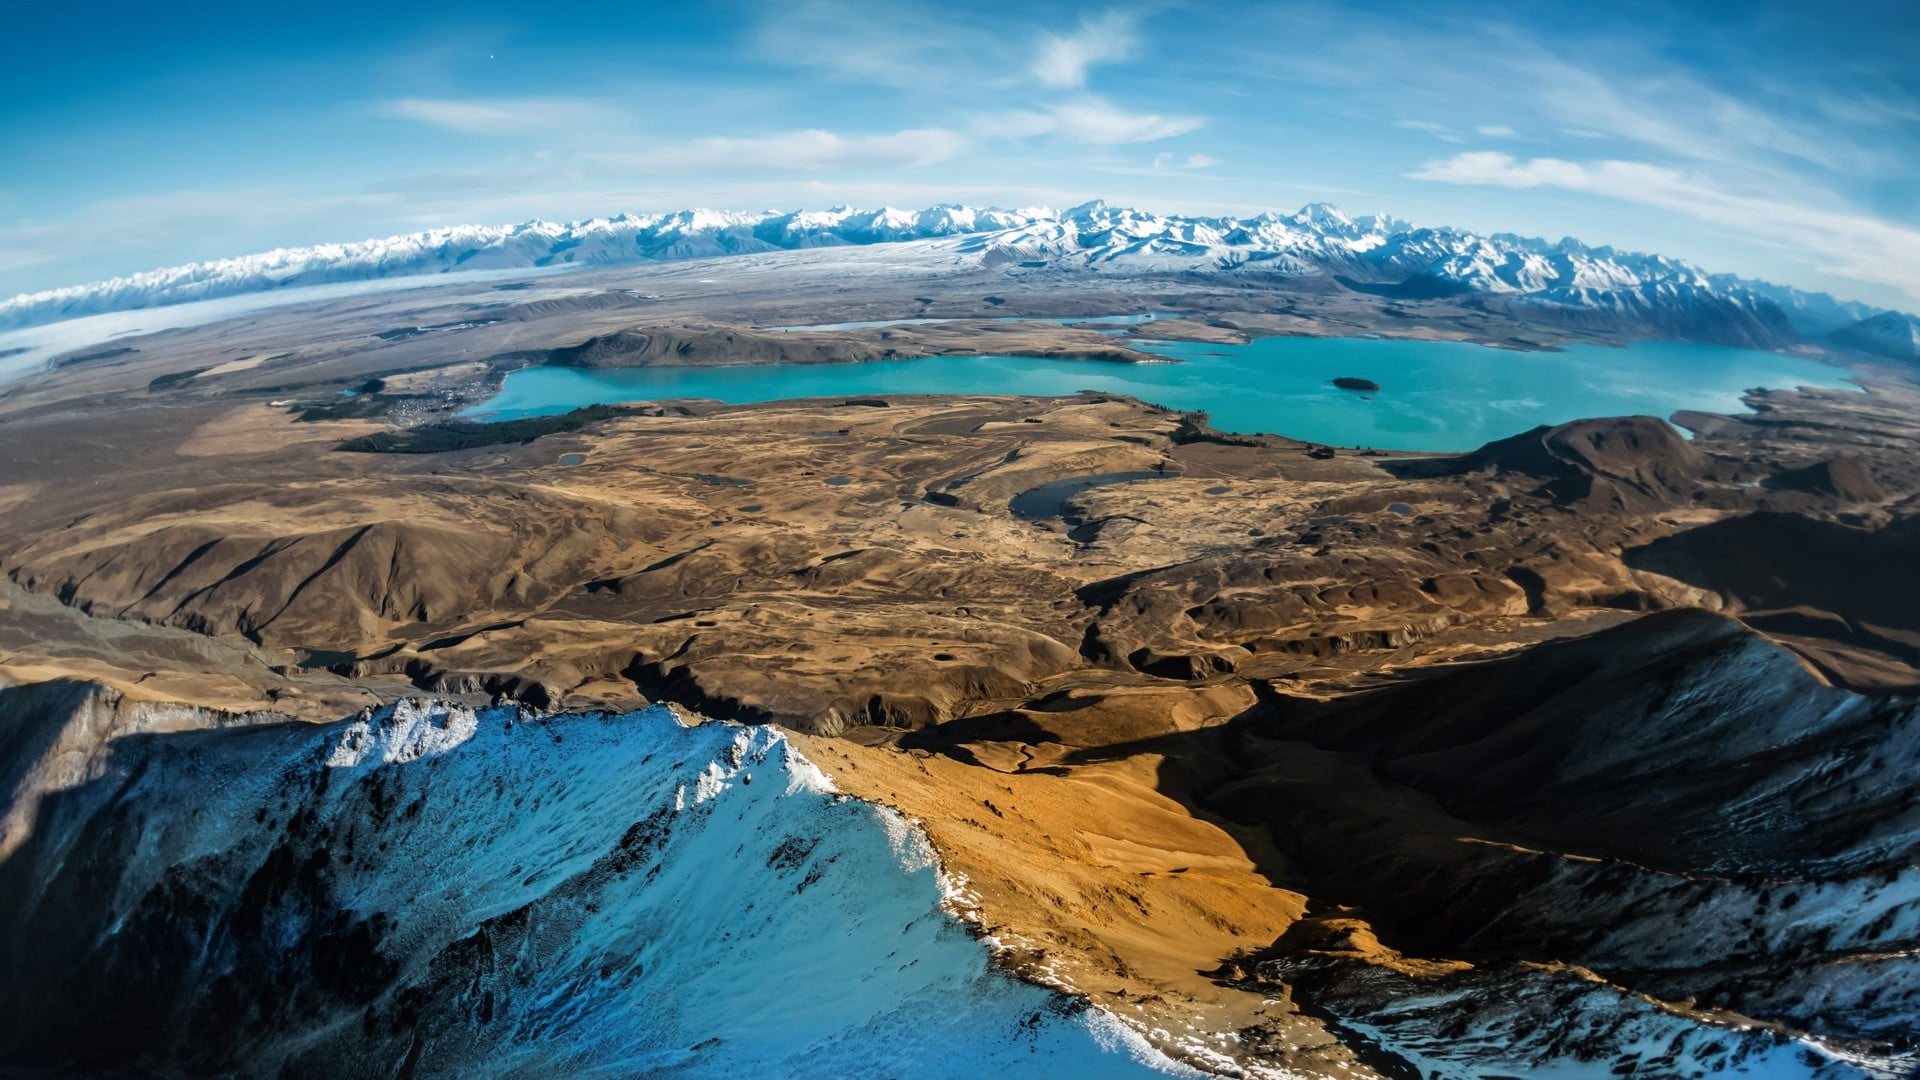 aerial photo of mountain, landscape, New Zealand, Lake Tekapo, mountains